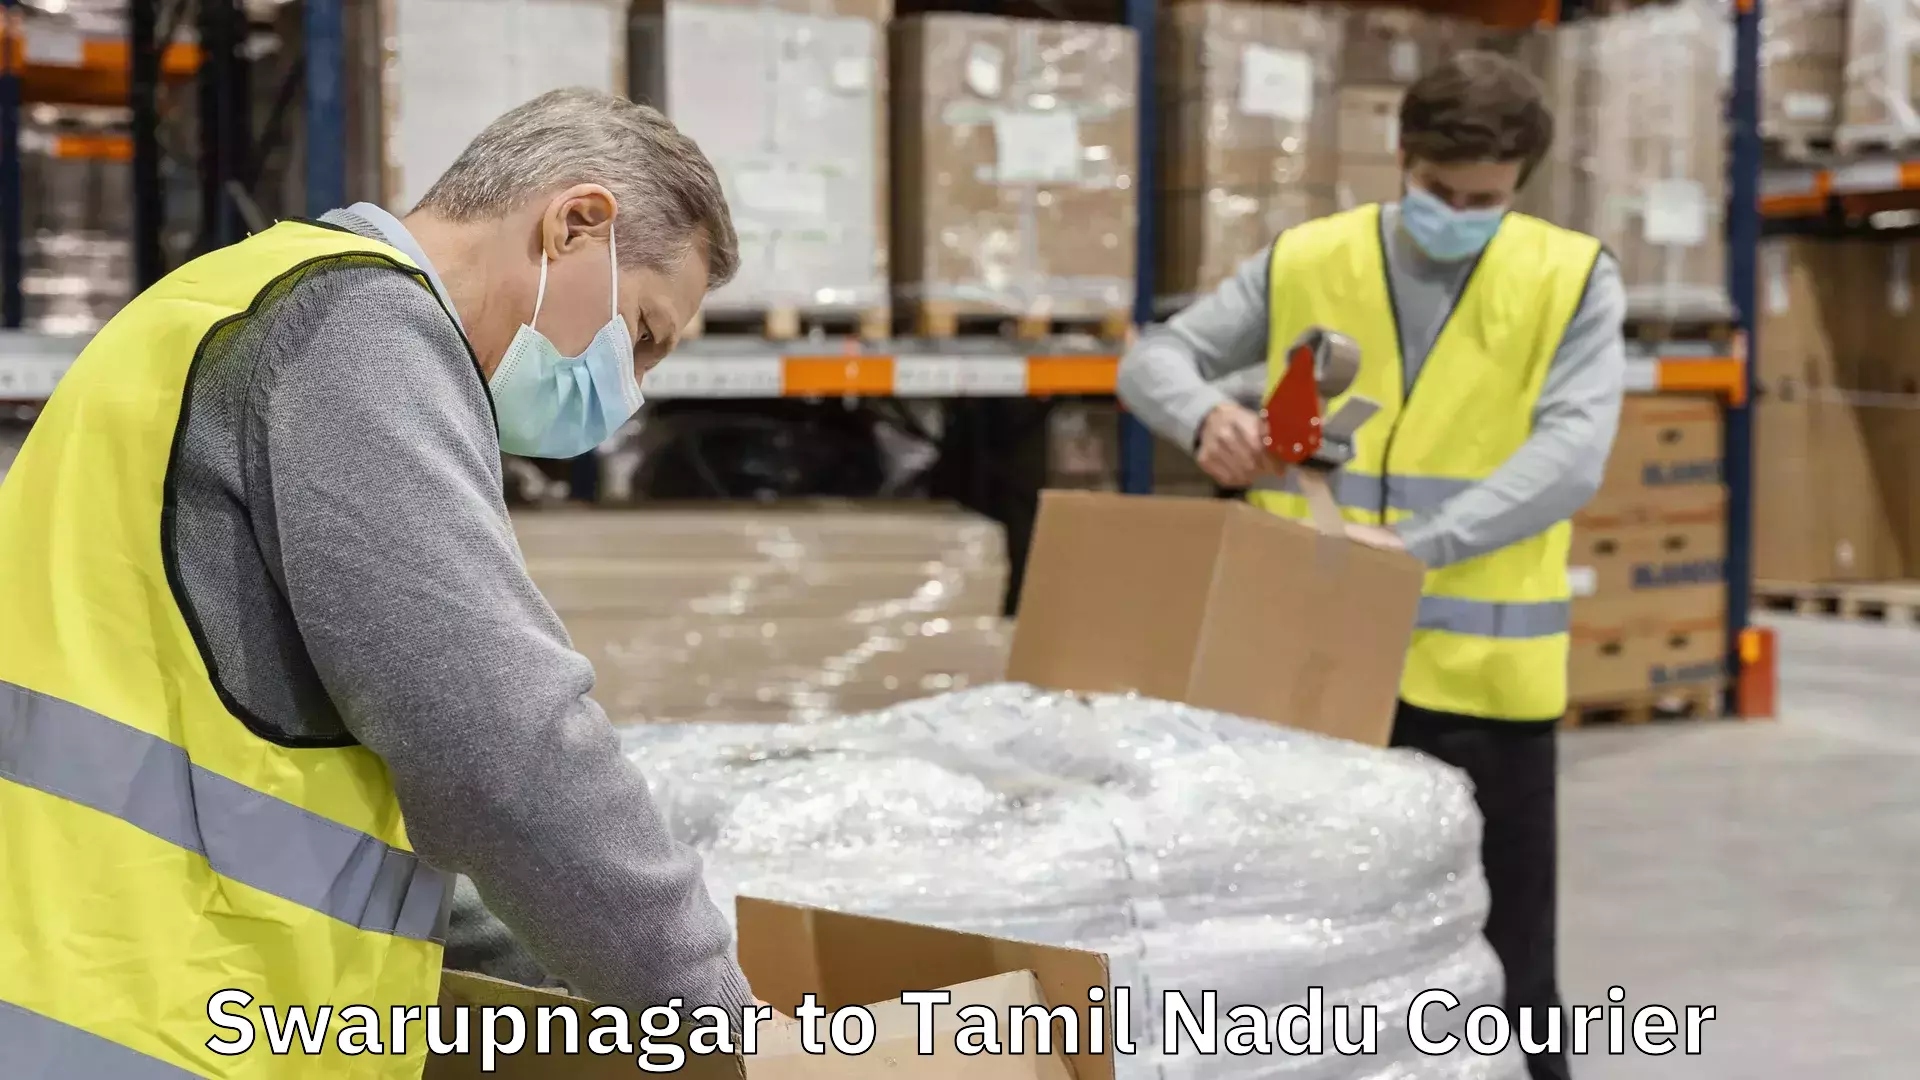 Express delivery capabilities Swarupnagar to Tamil Nadu